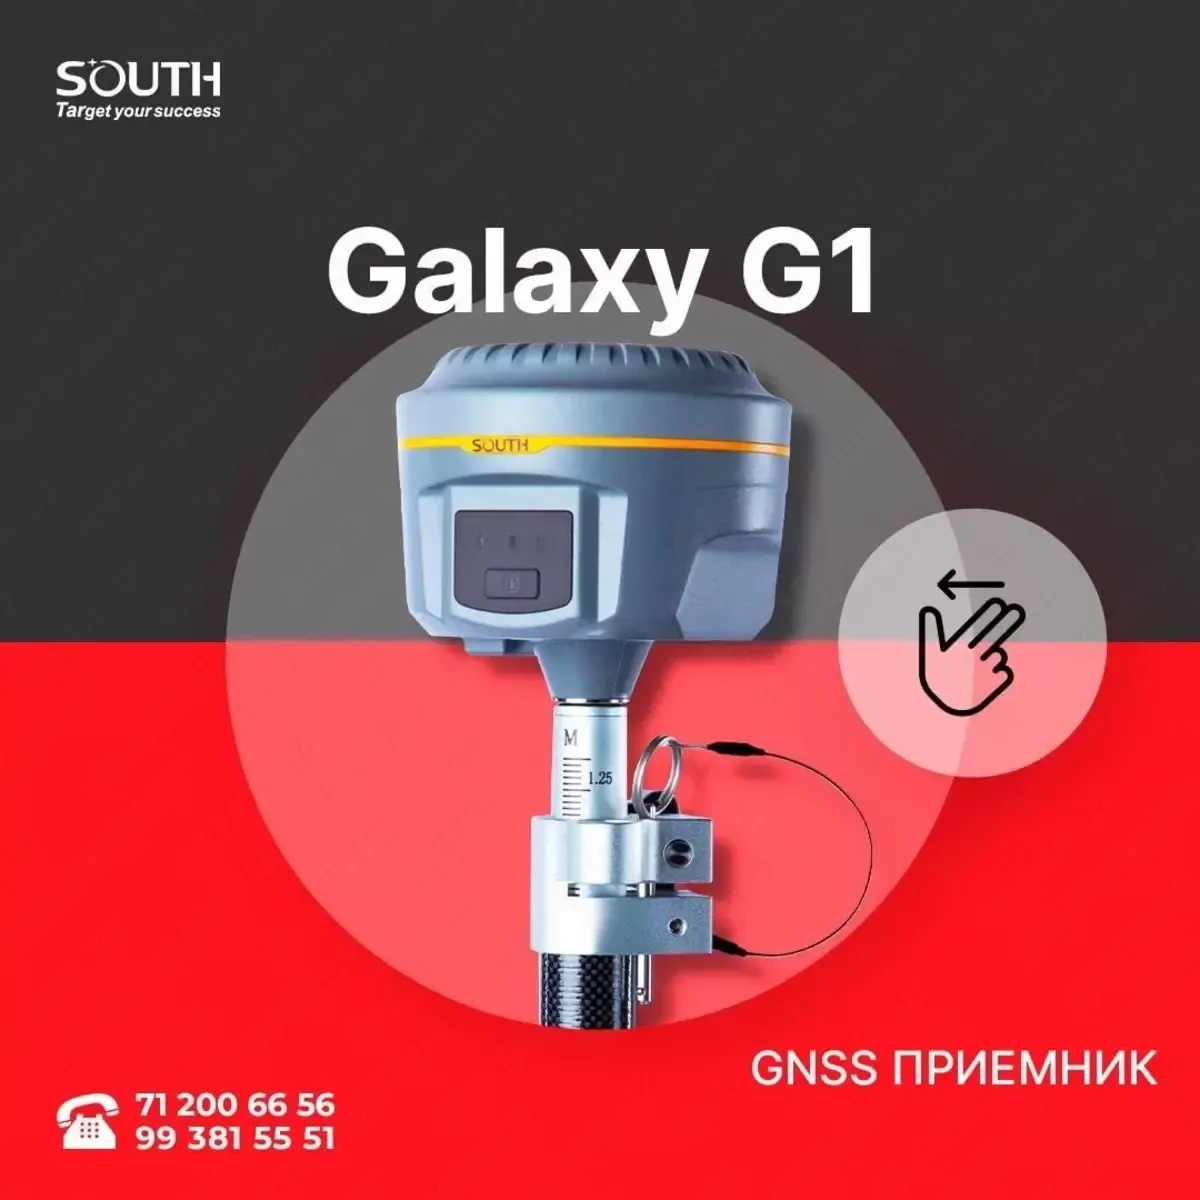 GNSS приемник SOUTH GALAXY G1#2